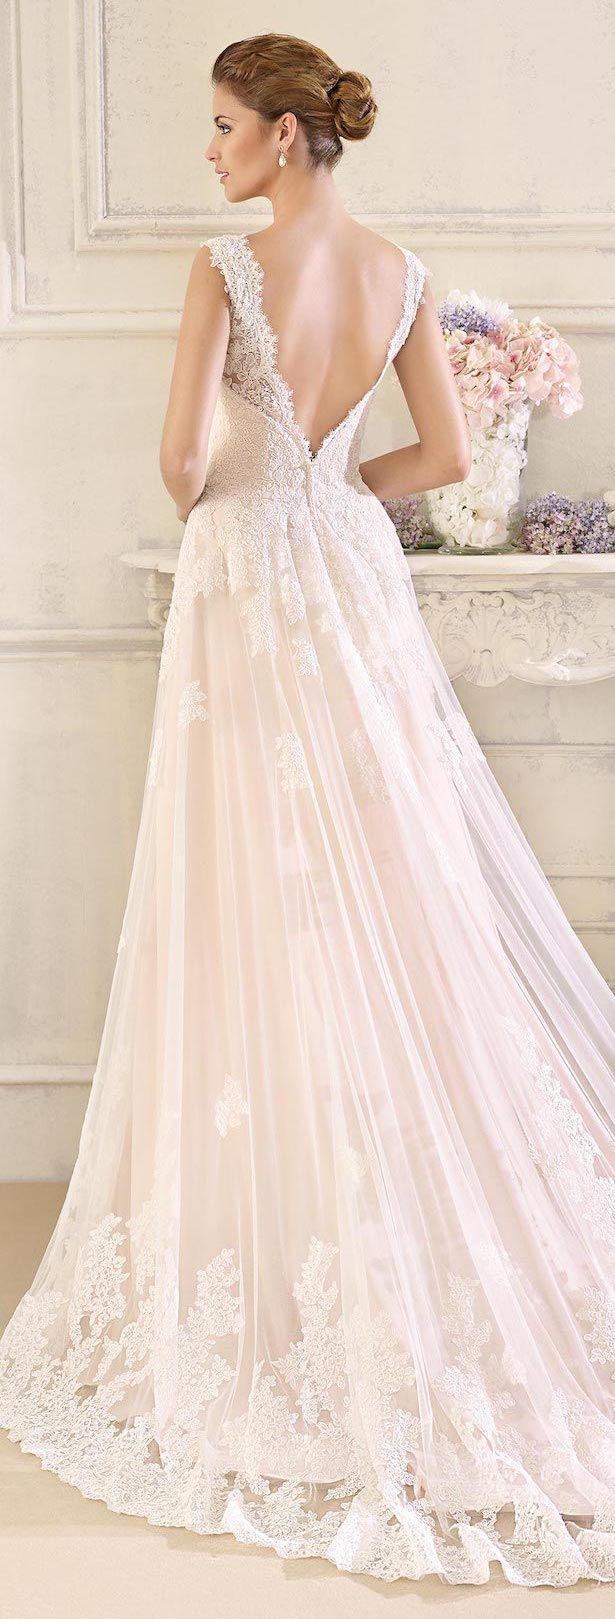 Mariage - Wedding Dresses By Fara Sposa 2017 Bridal Collection